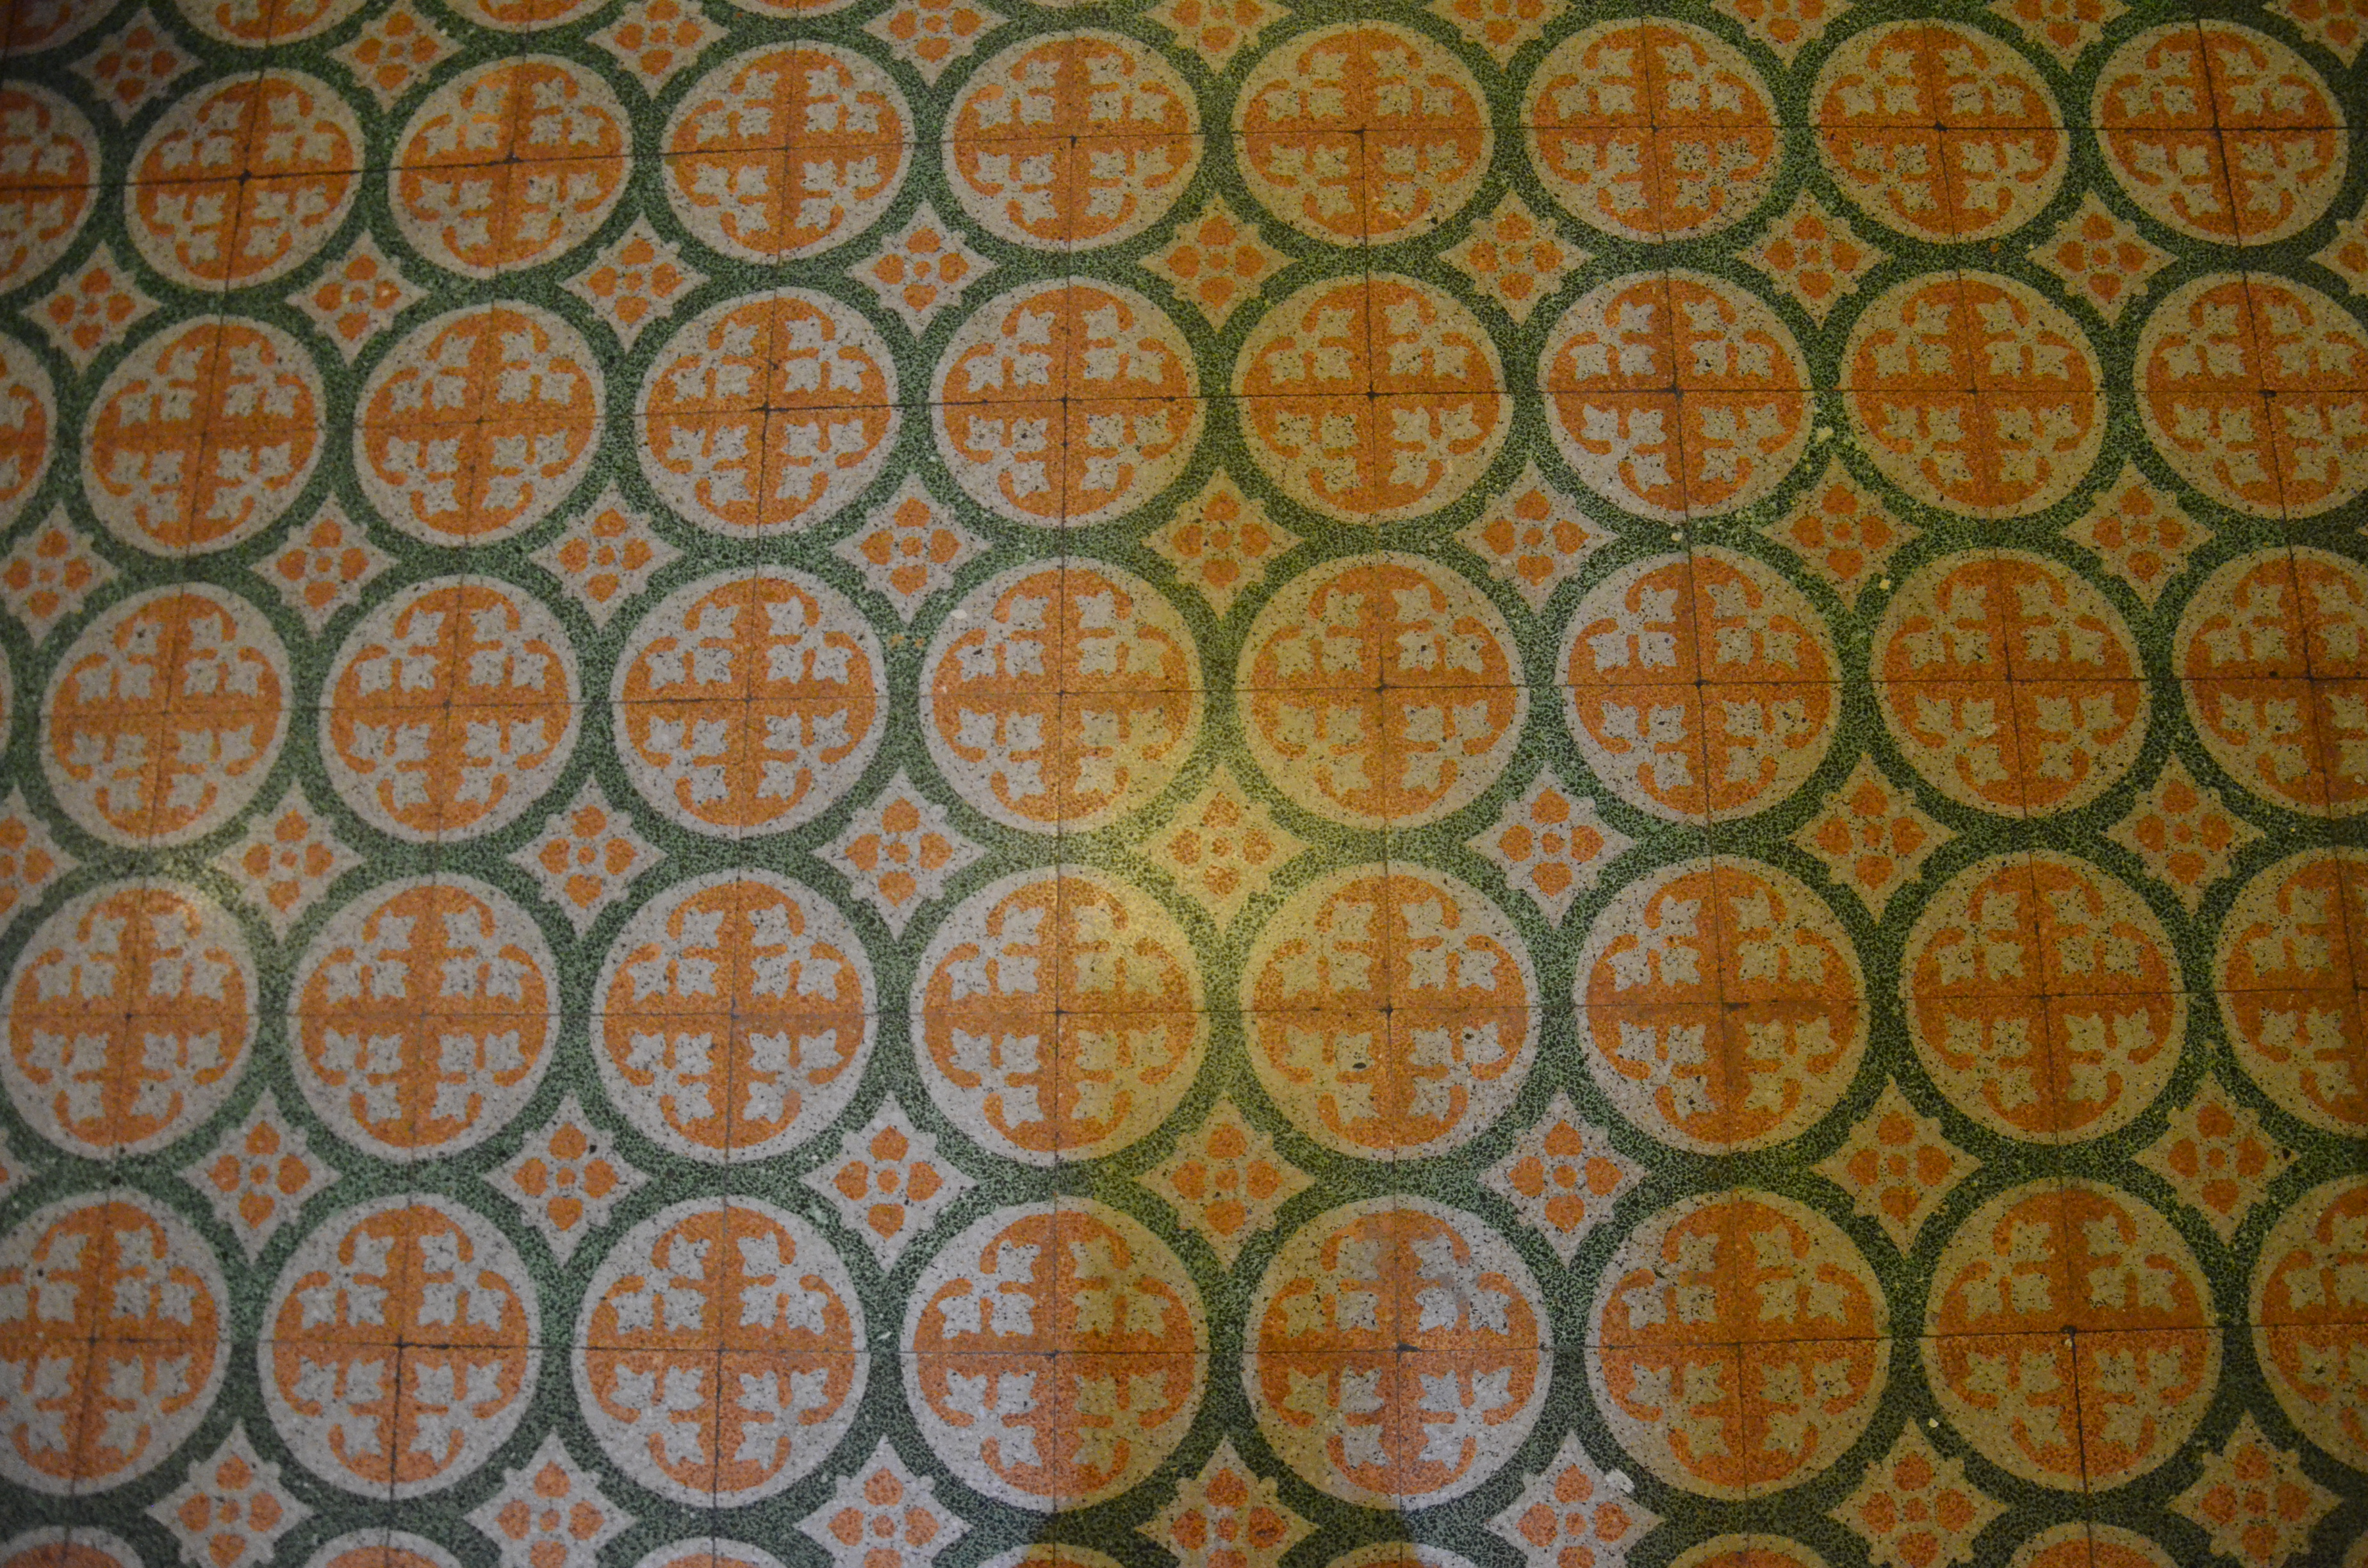 floor pattern